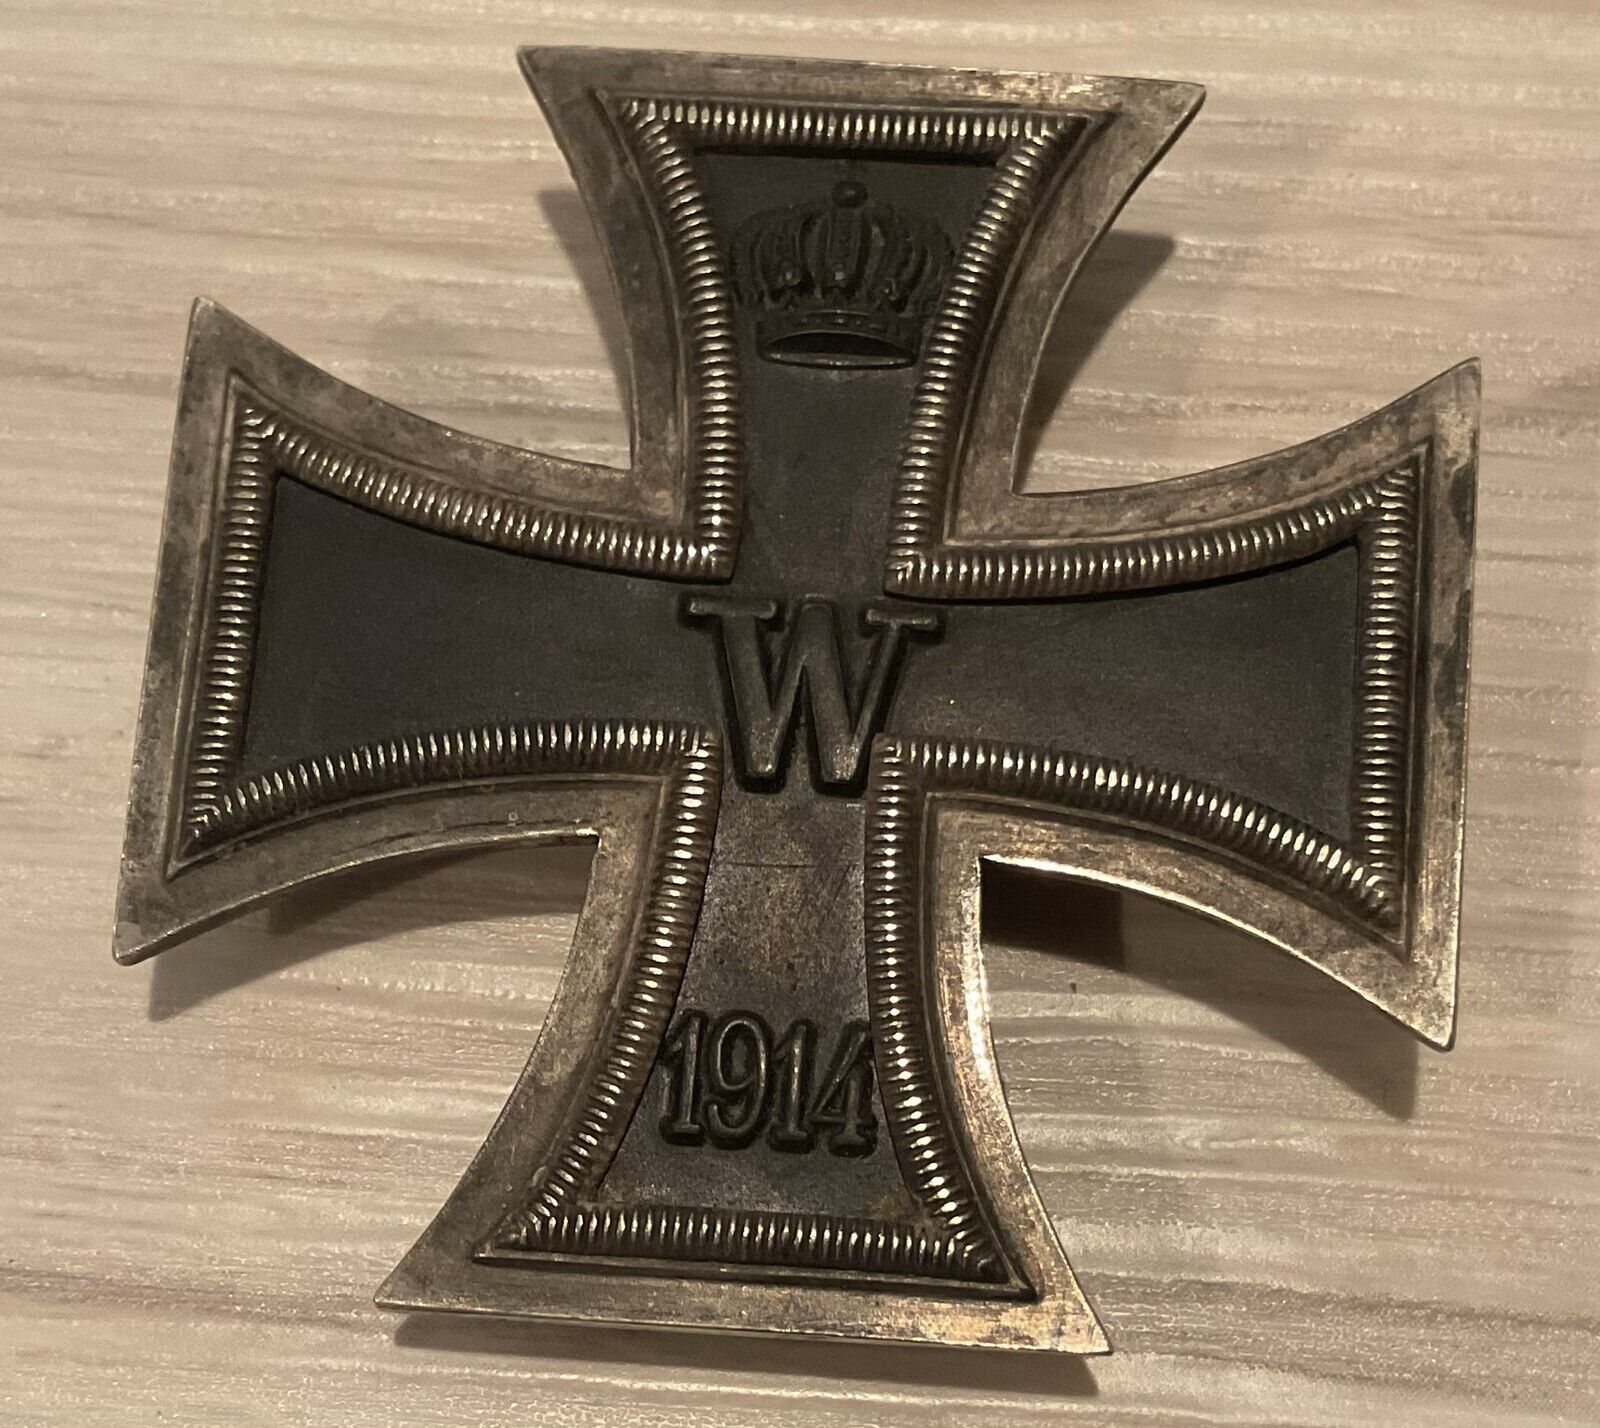 Imperial German,WW1, 𝗣𝗶𝗹𝗼𝘁𝘀 𝗜𝗿𝗼𝗻 𝗖𝗿𝗼𝘀𝘀, 𝗡𝗮𝗺𝗲𝗱/𝗣𝗹𝗮𝗰𝗲𝗱